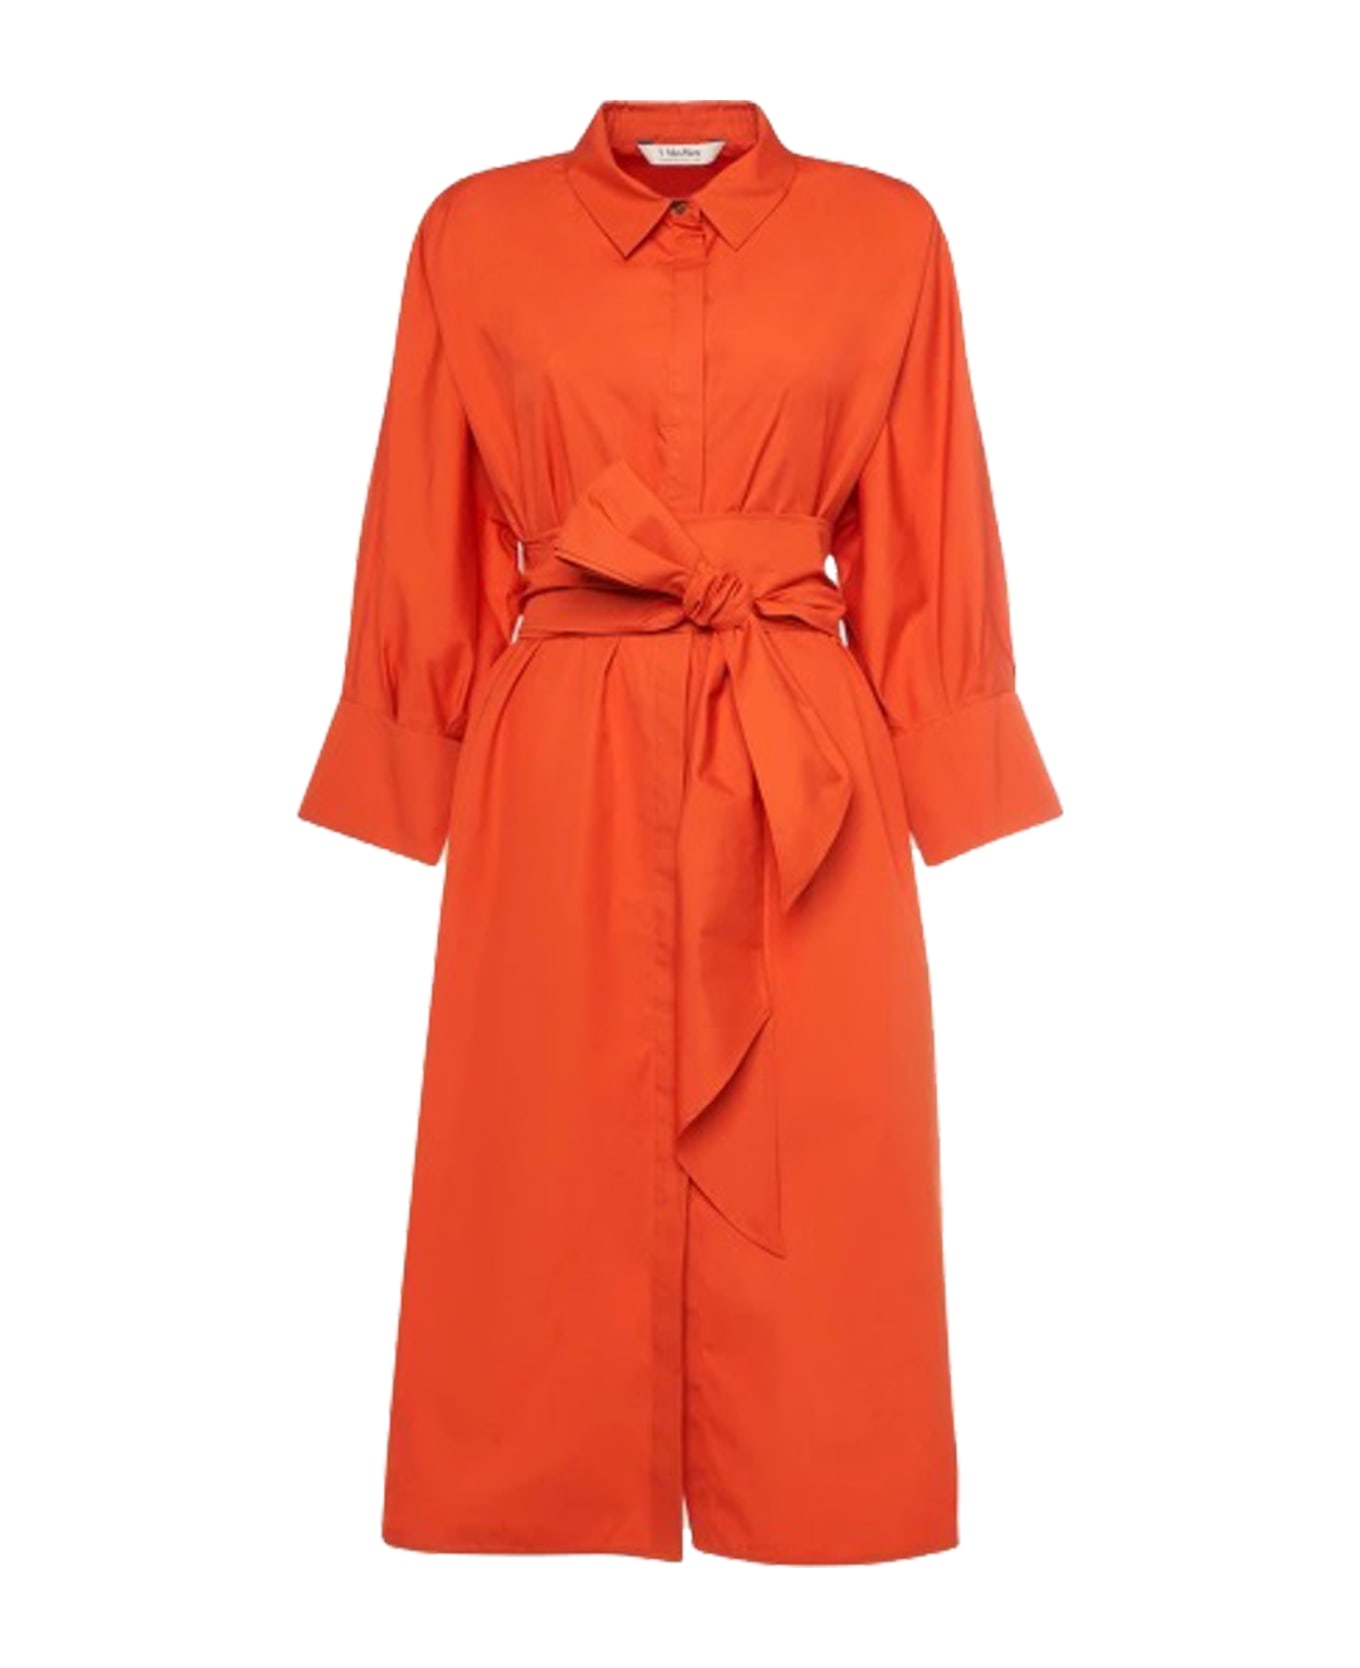 'S Max Mara Tabata Dress - Orange